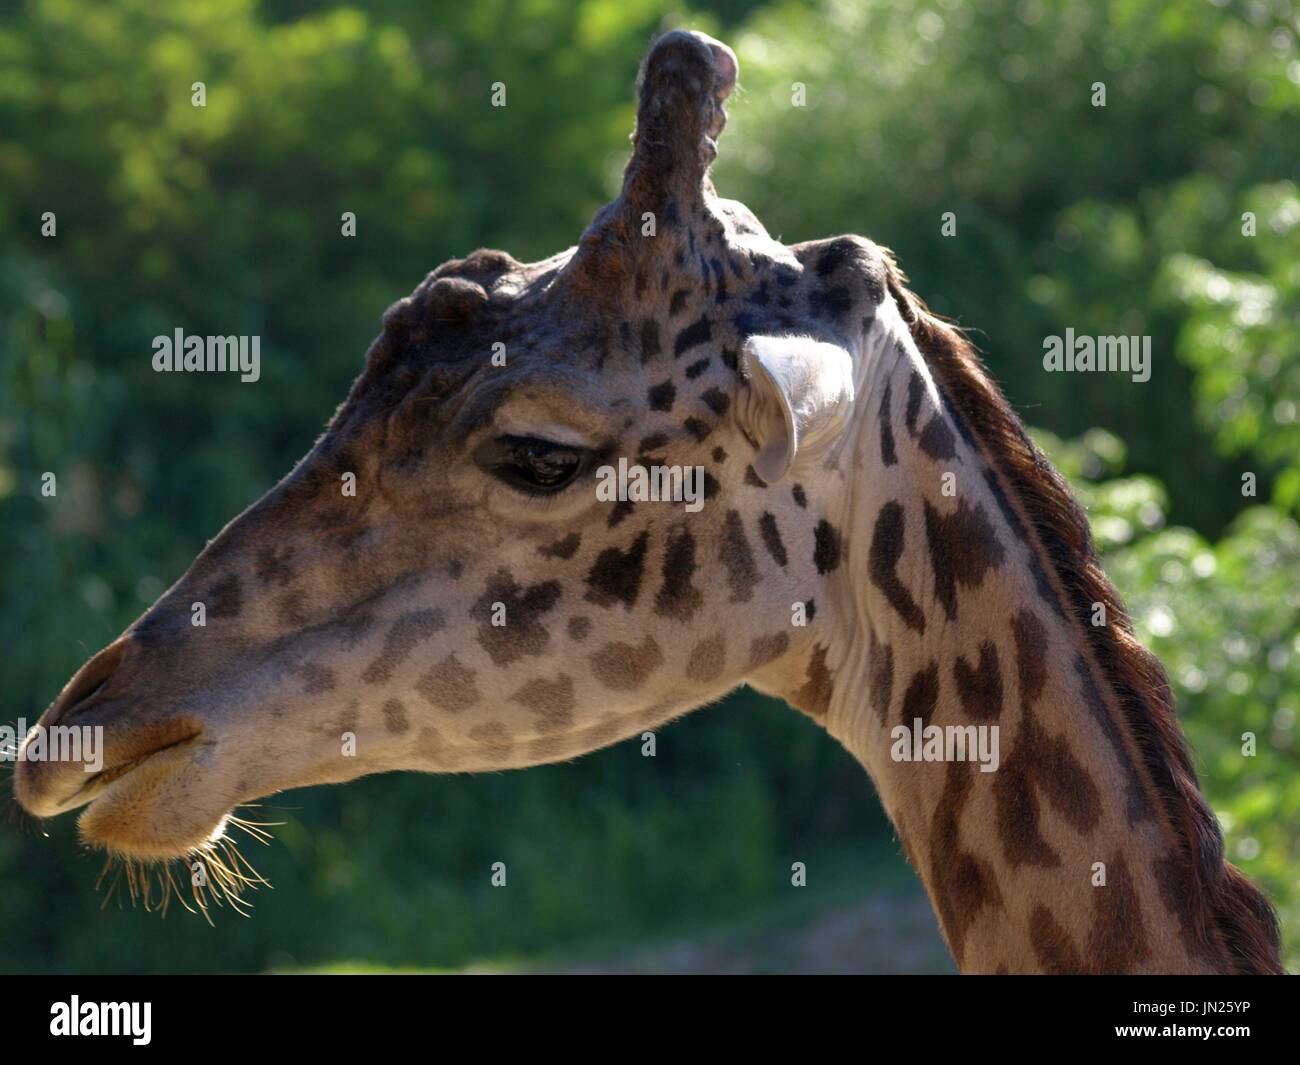 Young giraffe close up Stock Photo